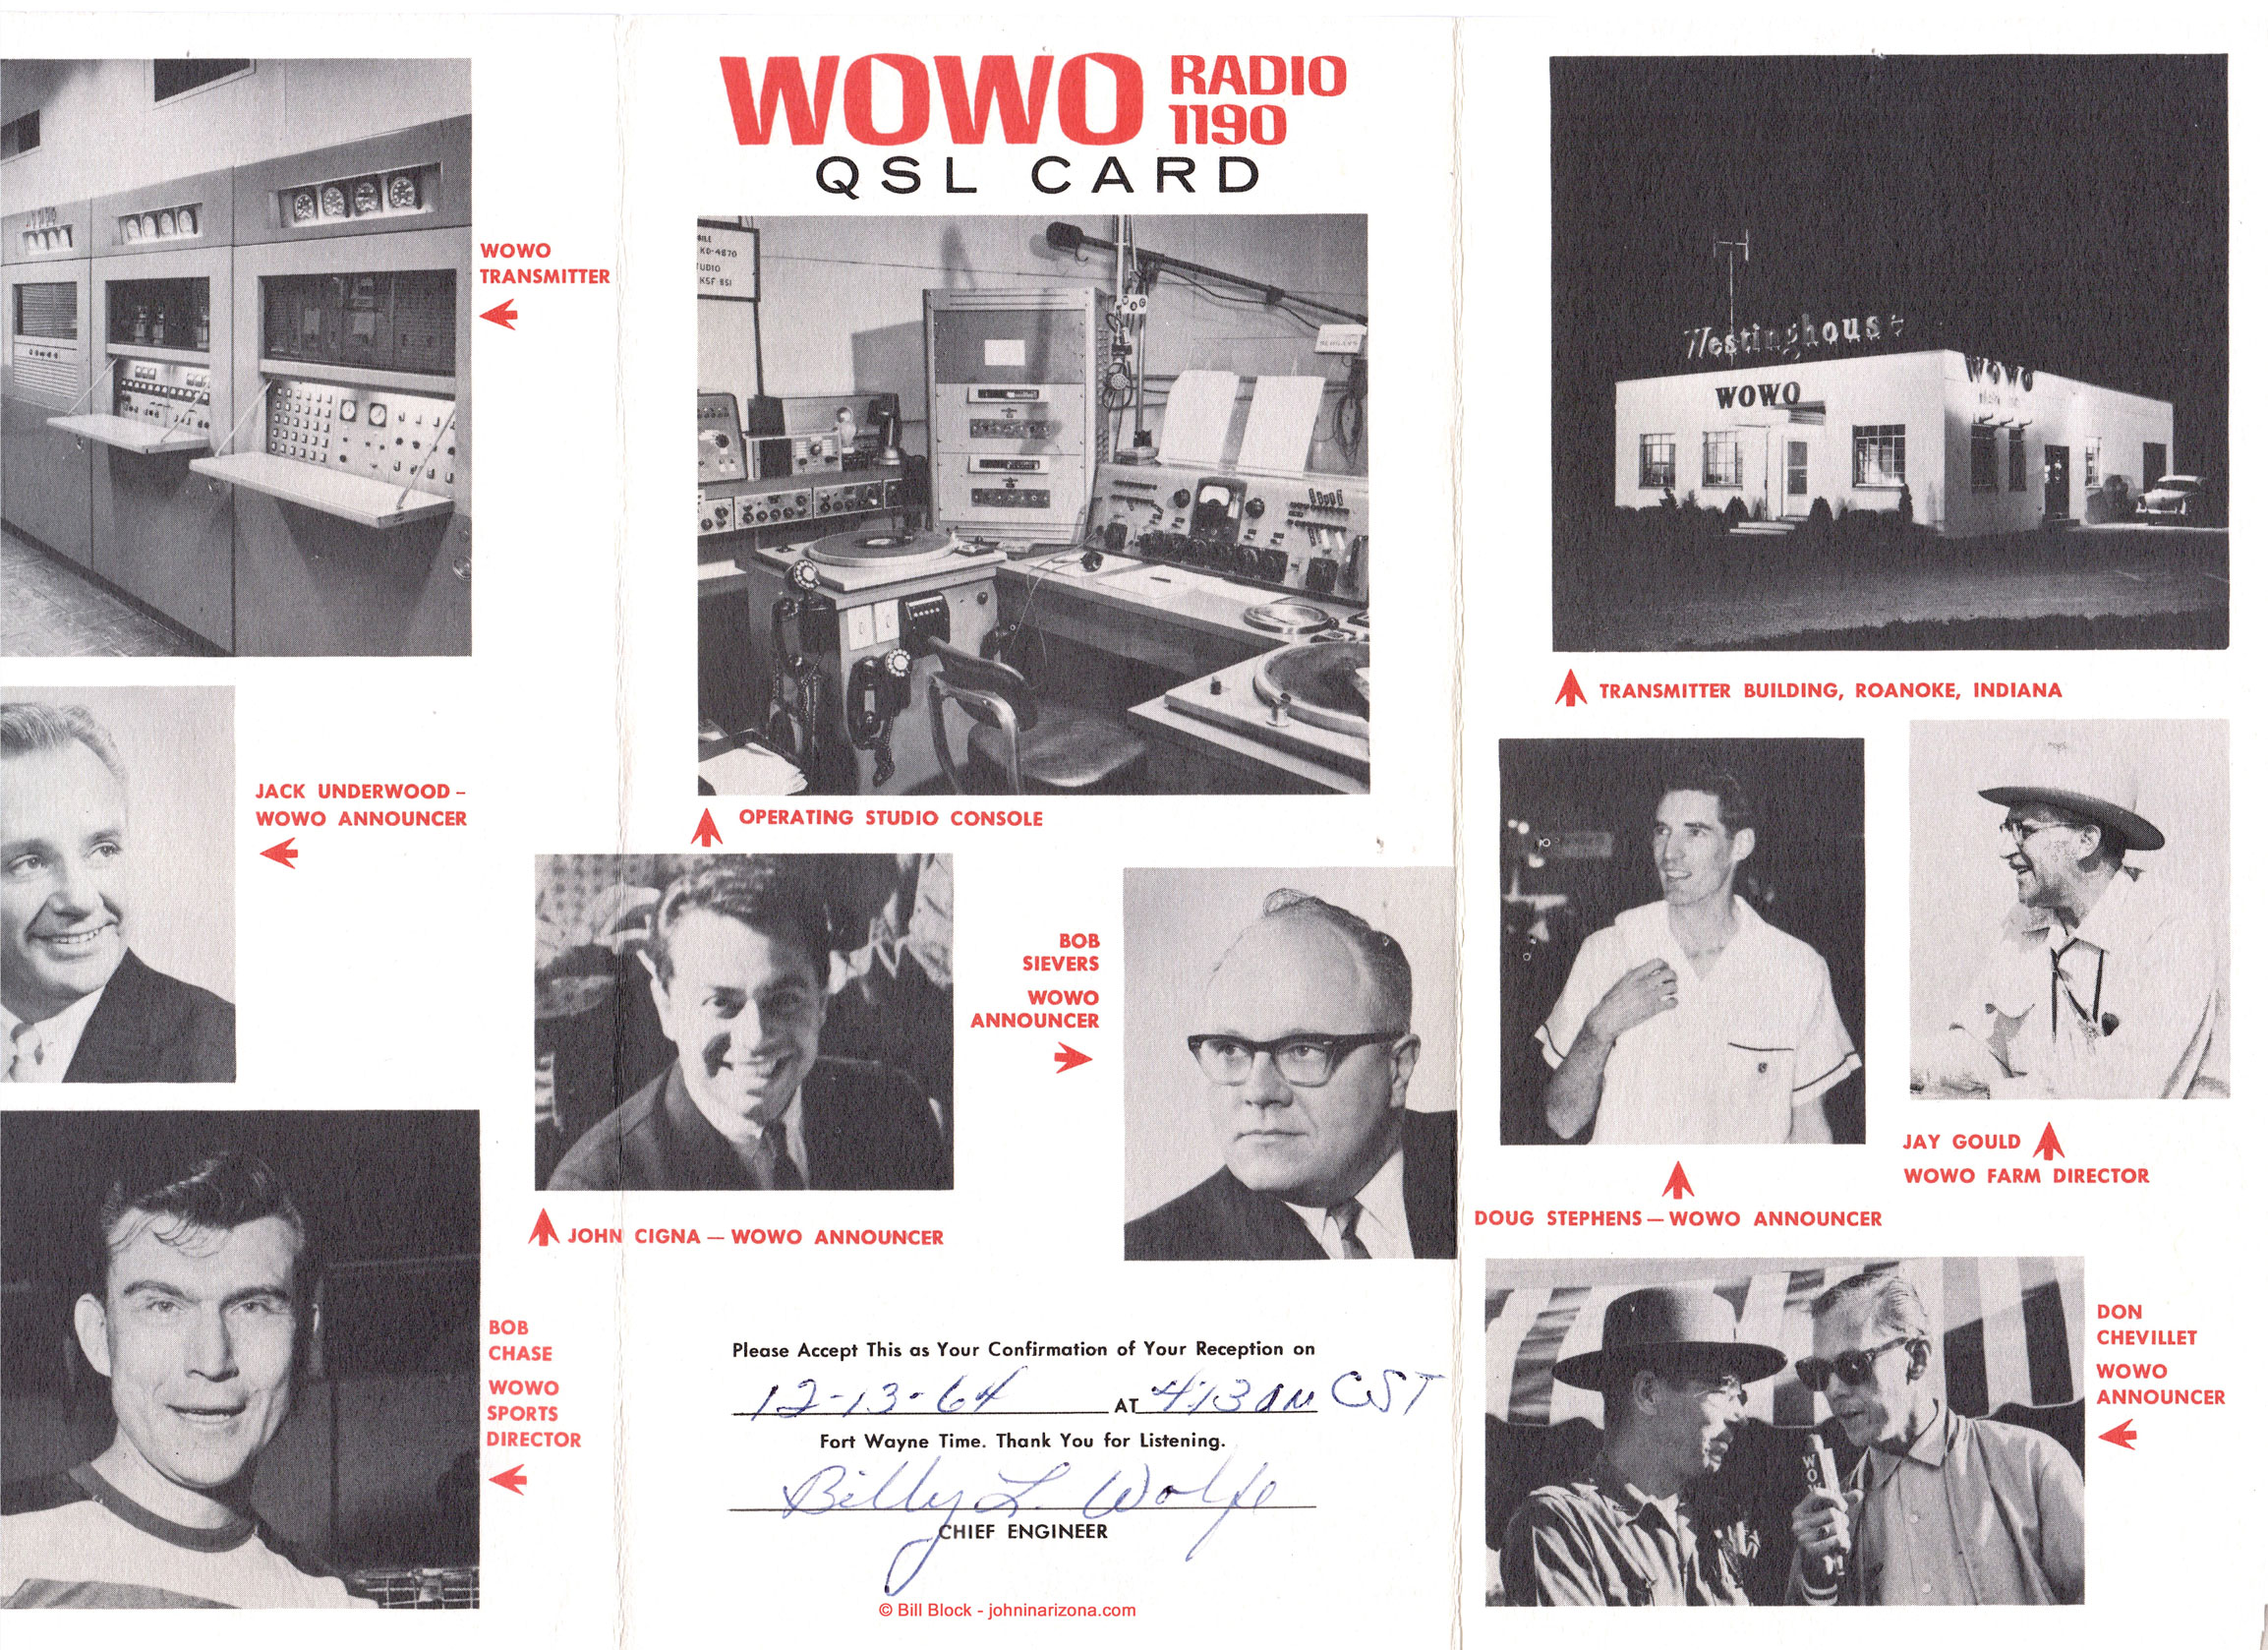 WOWO Radio 1190 Fort Wayne, Indiana